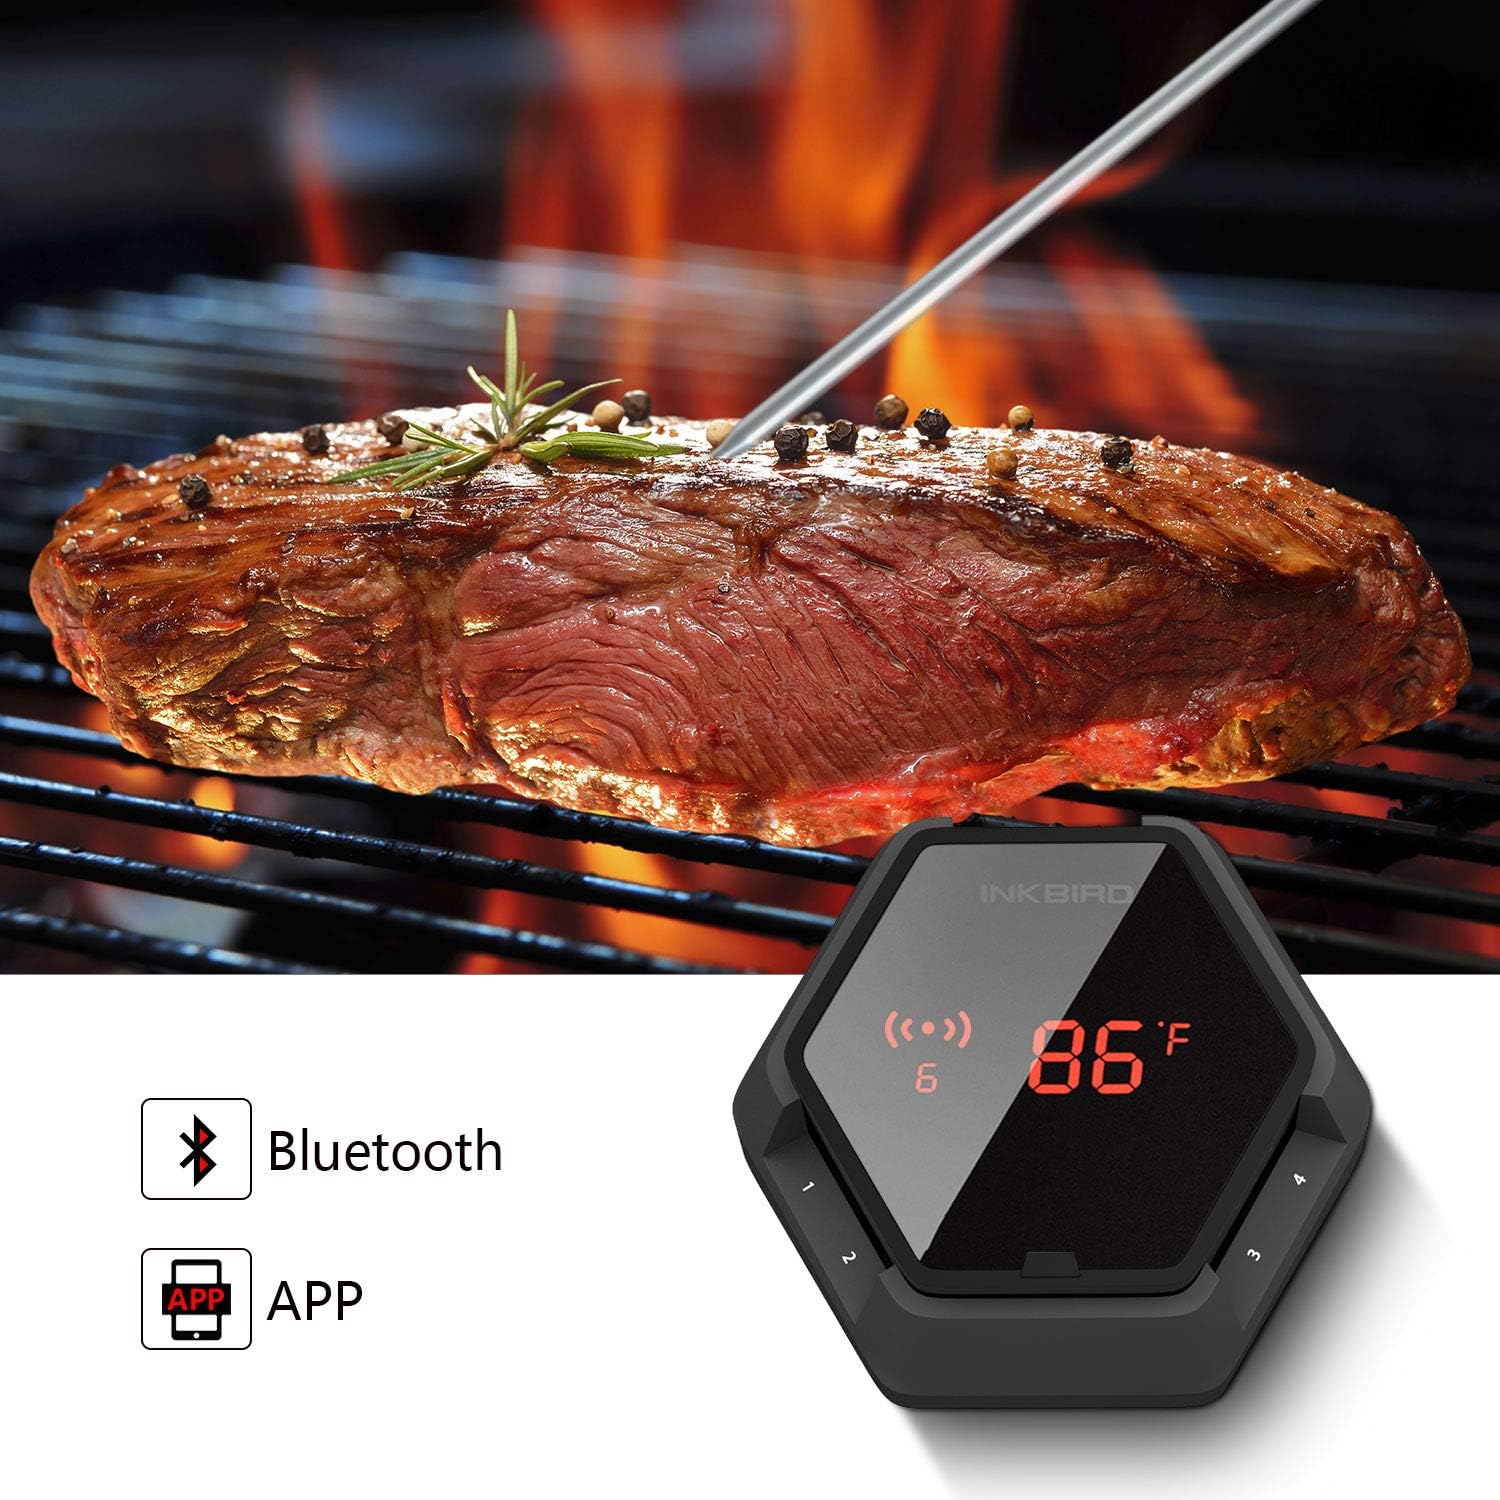 Inkbird Grill Bluetooth BBQ Thermometer Wireless IBT-6XS, 6 Probes Digital Smoker Grill Thermometer for Cooking,150ft Bluetooth Meat Thermometer, Magnet, Timer, Alarm for Kitchen, Food (Black)